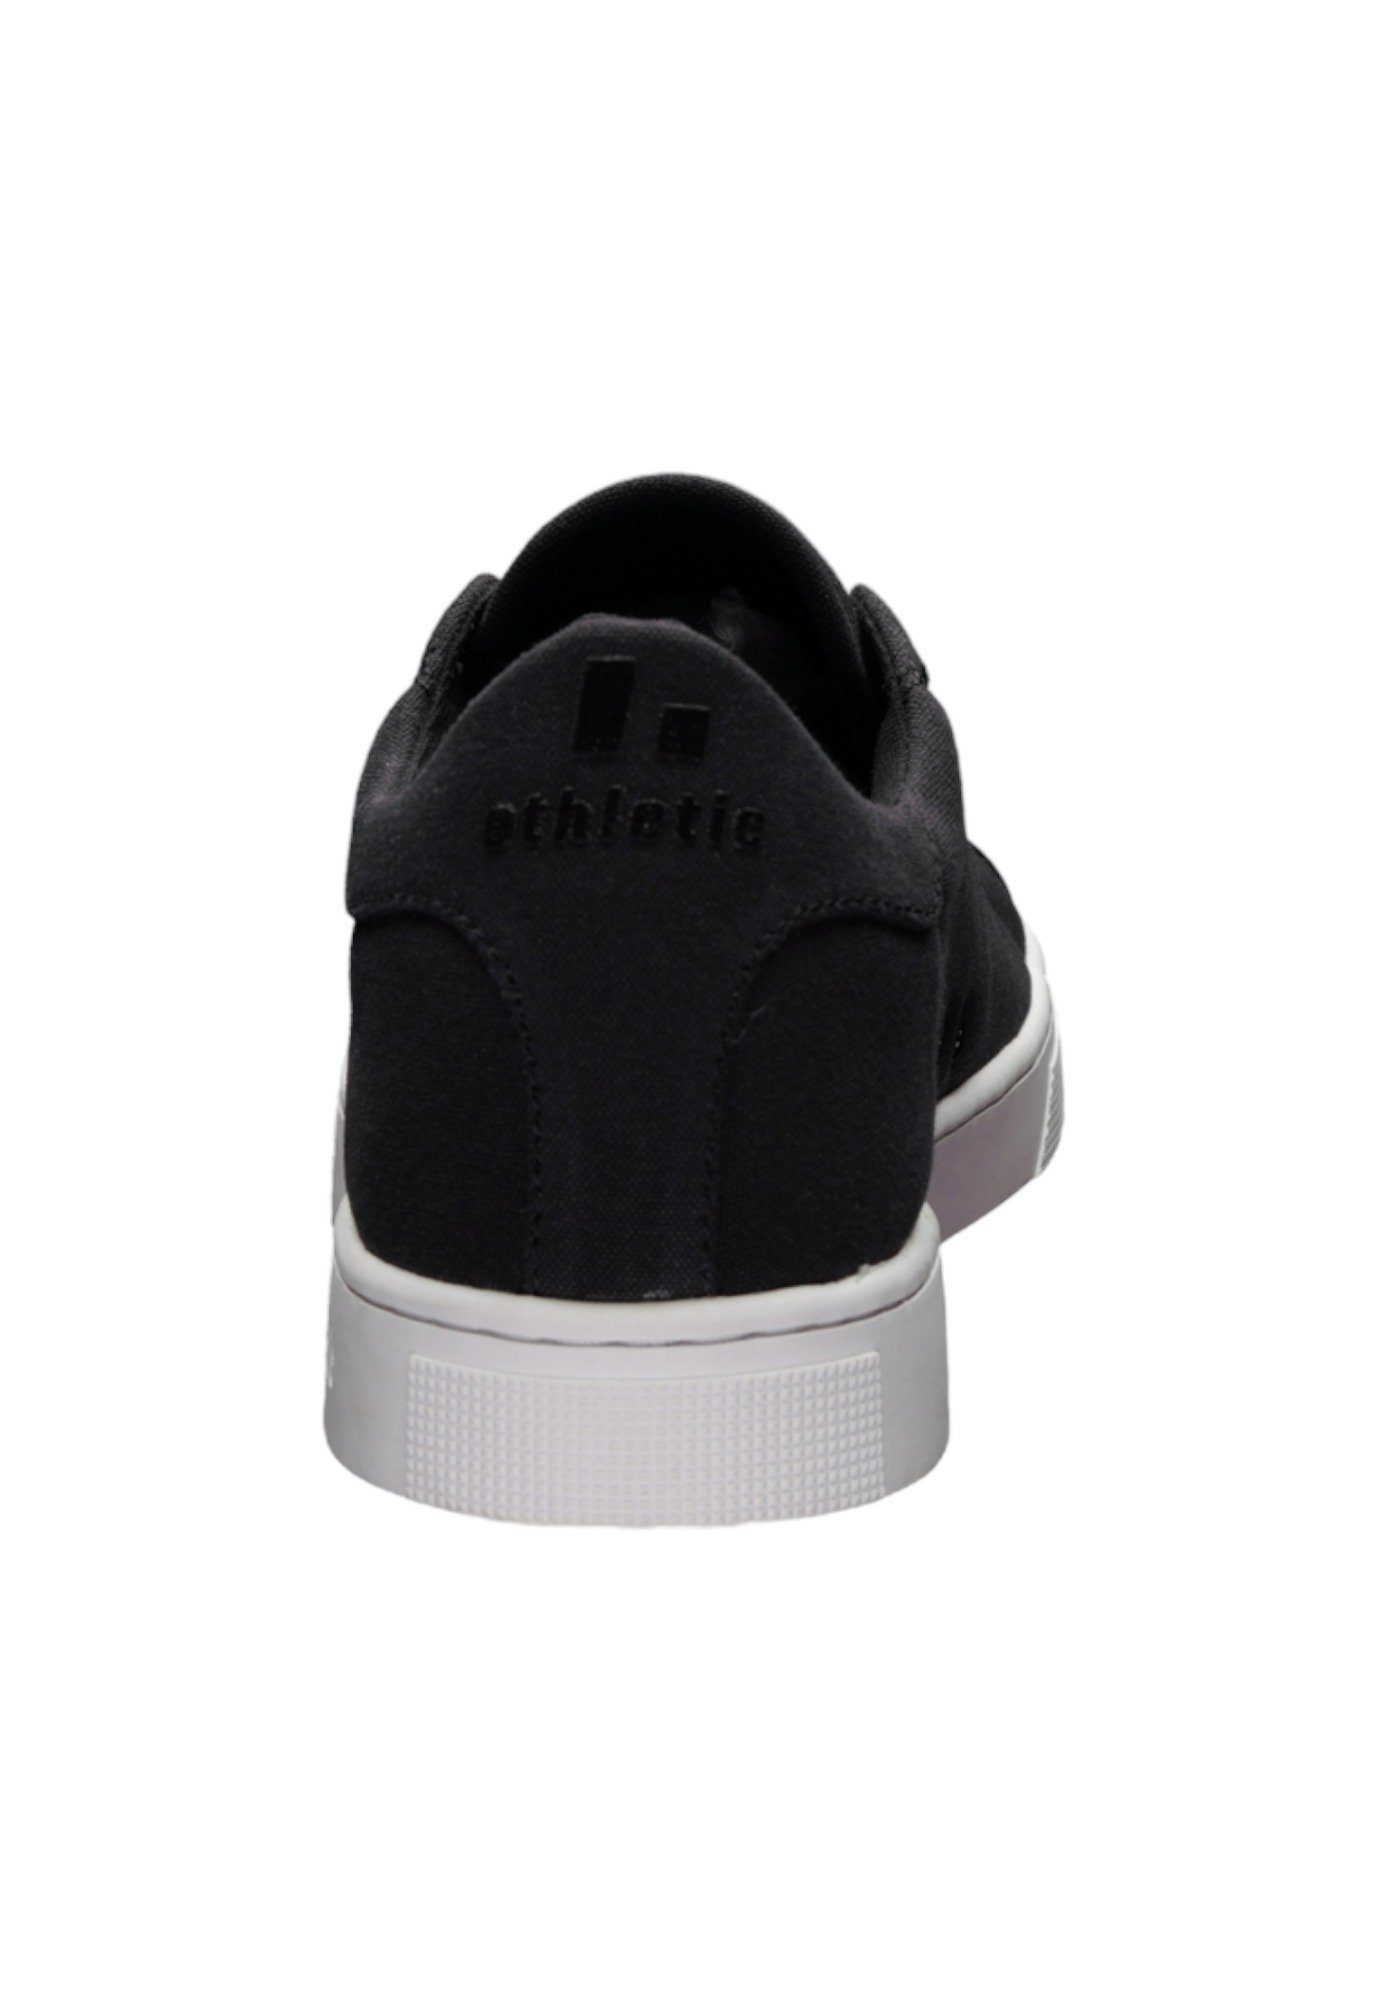 Jet Cut - Fairtrade ETHLETIC Produkt Sneaker Black Active Lo Black Jet